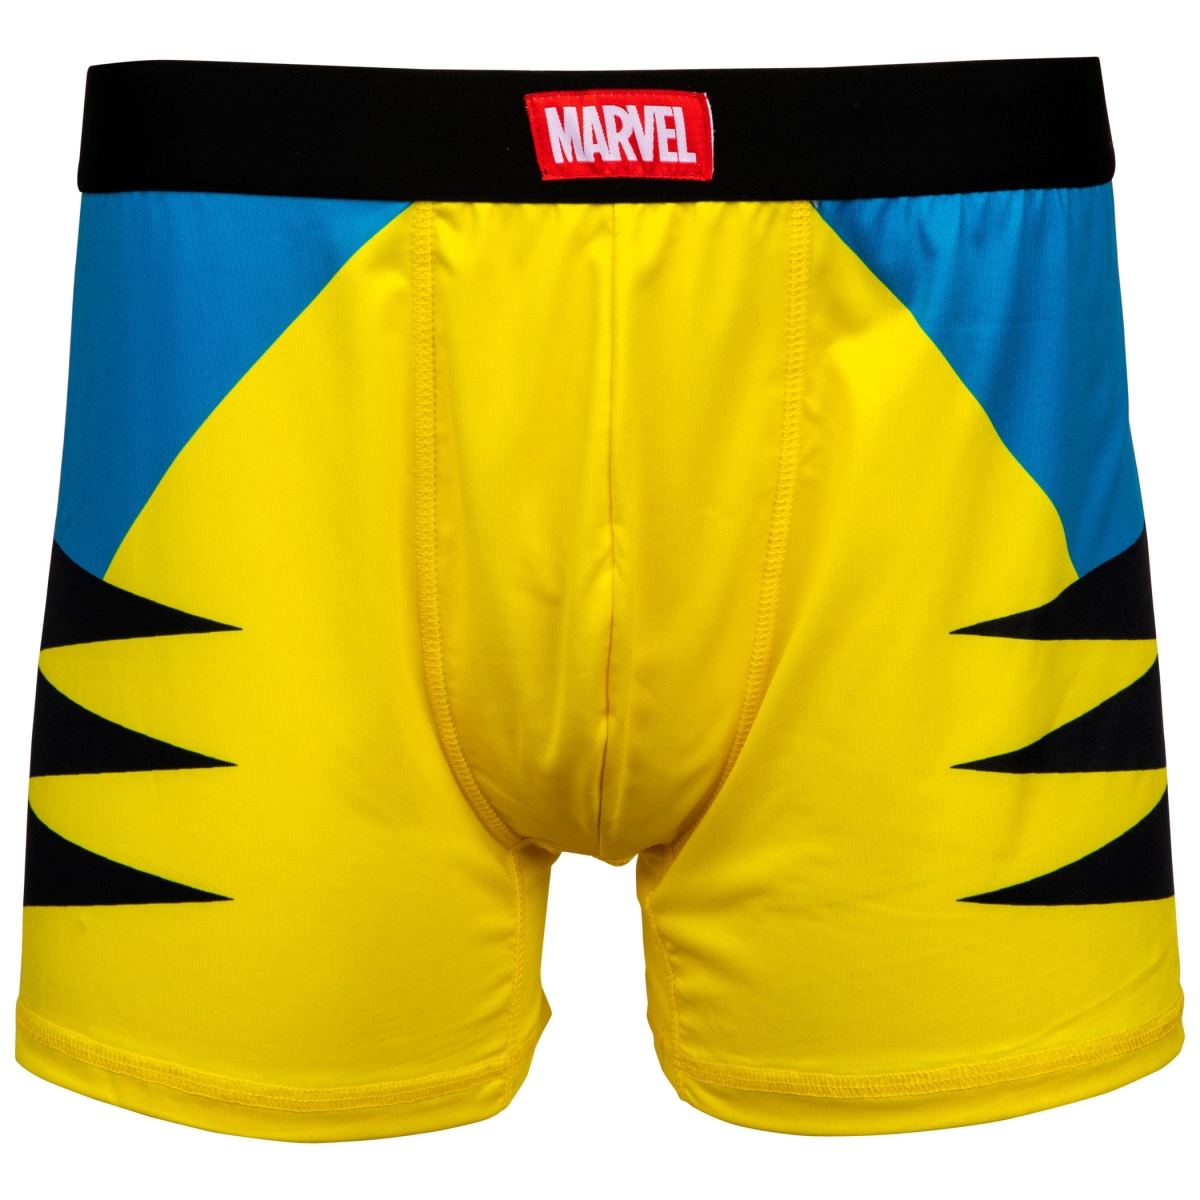 Wolverine 798982-xlarge-40-42 Wolverine Costume Mens Underwear Boxer Briefs - Extra Large 40-42 -  Wolverine Publishing LLC, 798982-xlarge(40-42)